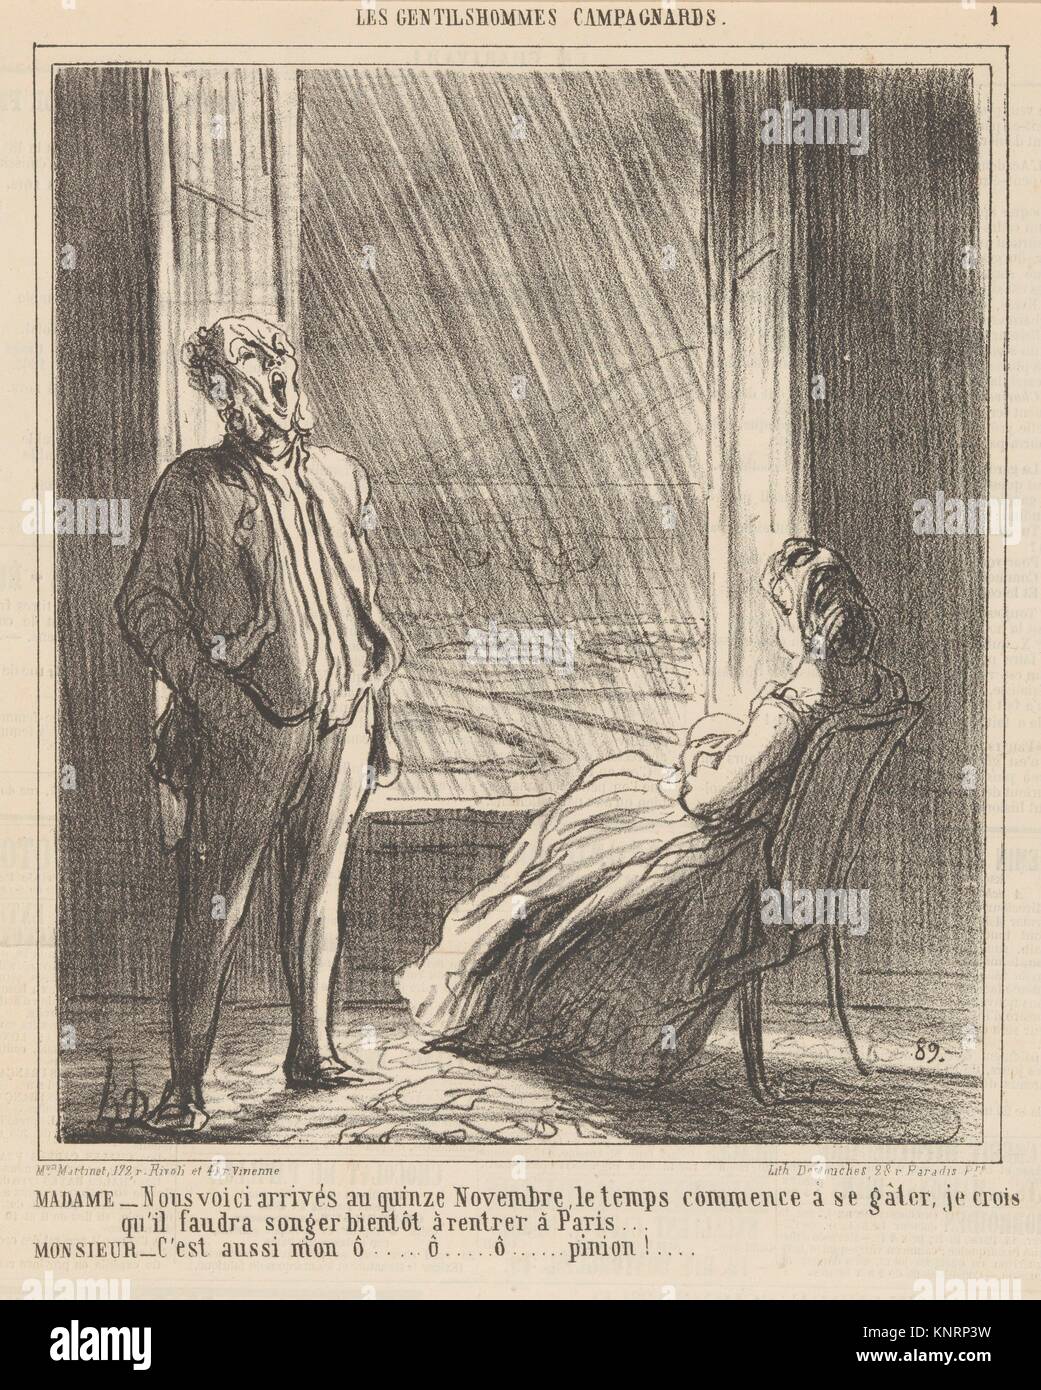 Les Gentilshommes Campagnards. Artista: Honoré Daumier (Francés, Marsella 1808-1879 Valmondois); Fecha: Noviembre 28, 1864; media: Litografía; Foto de stock